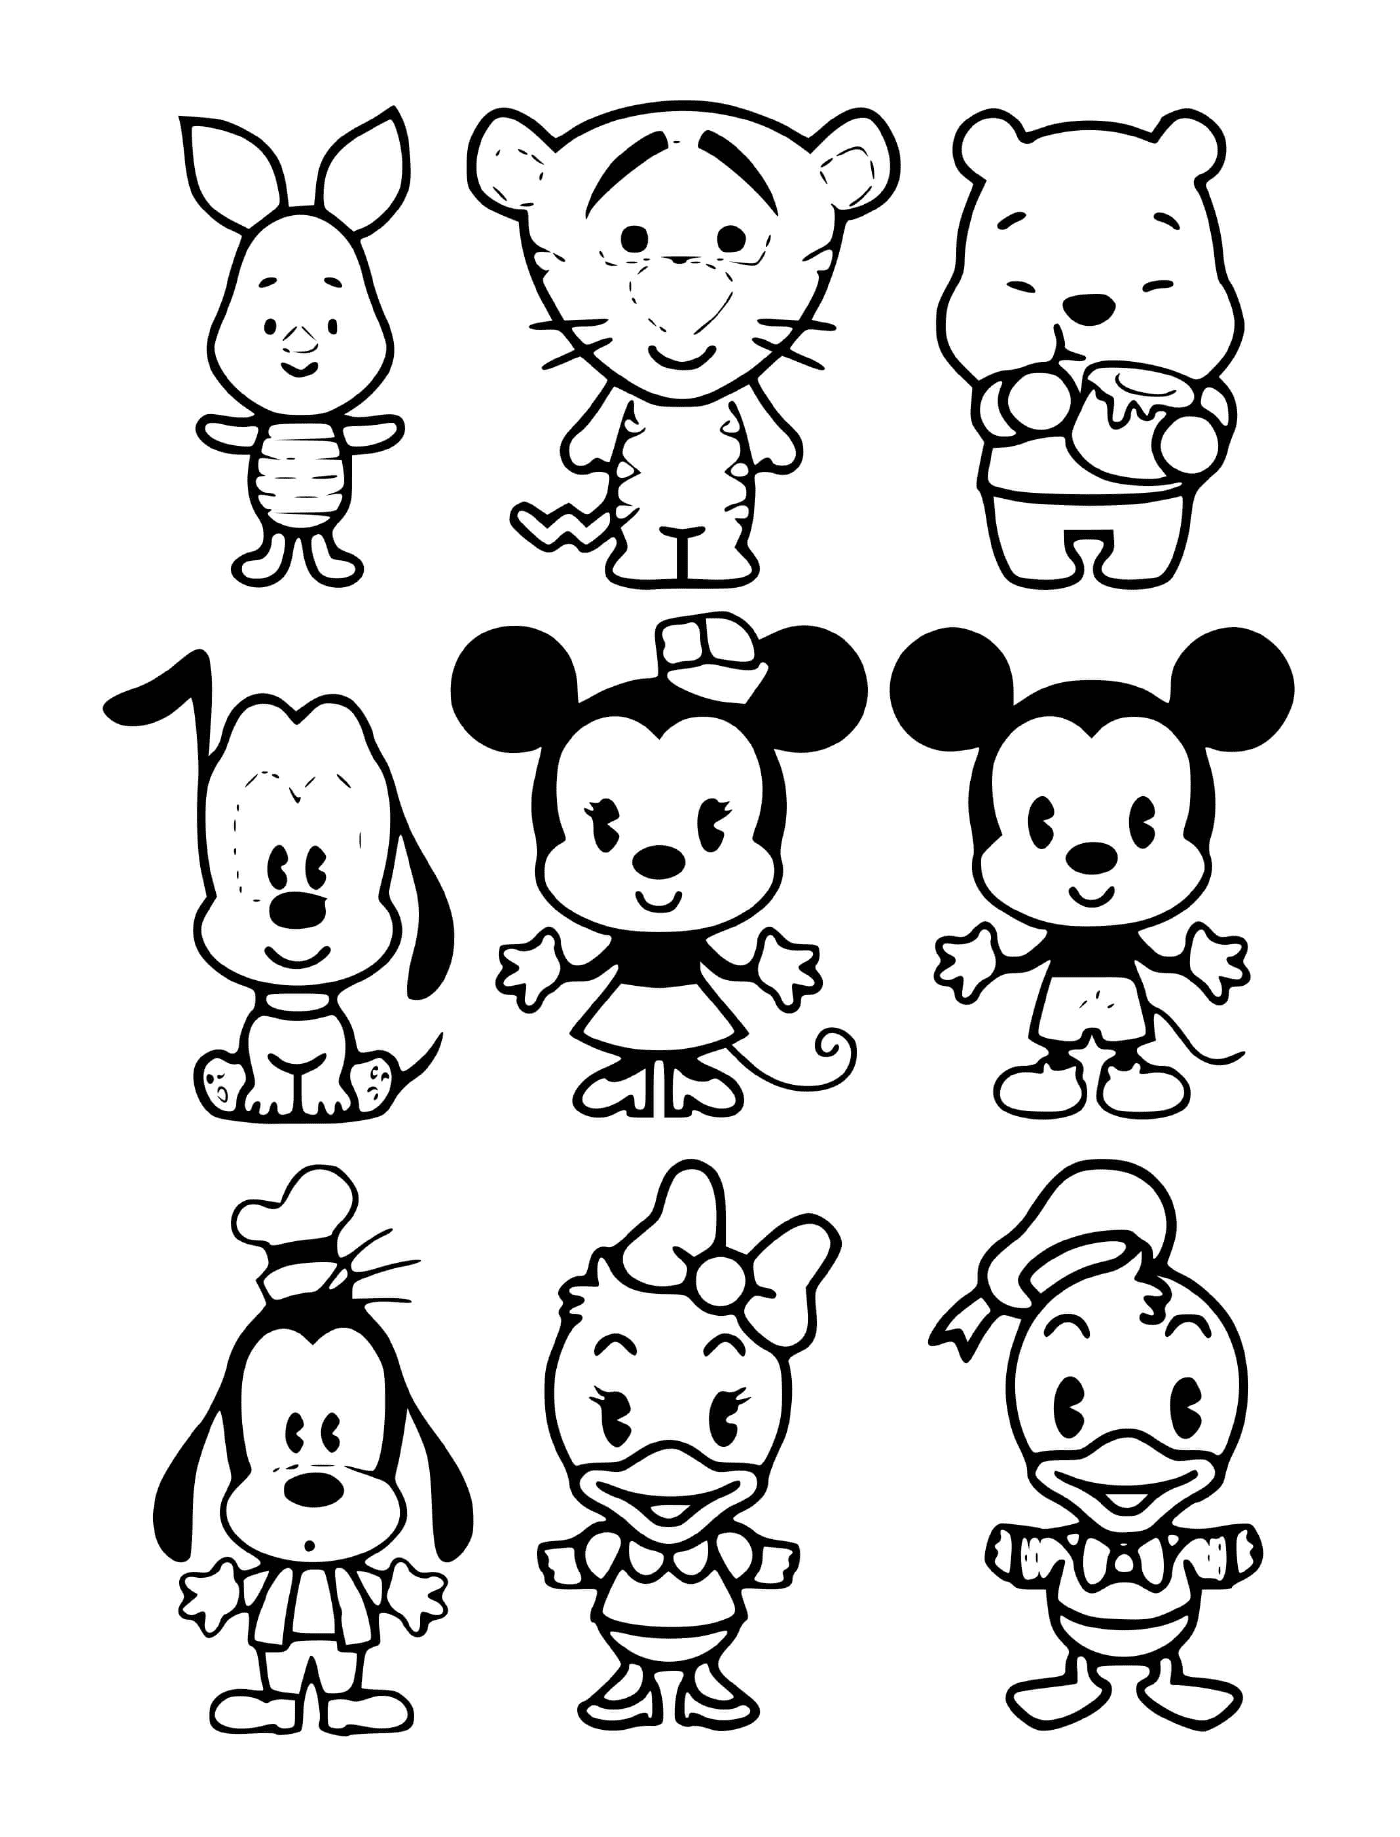  Baby characters Disney kawaii 